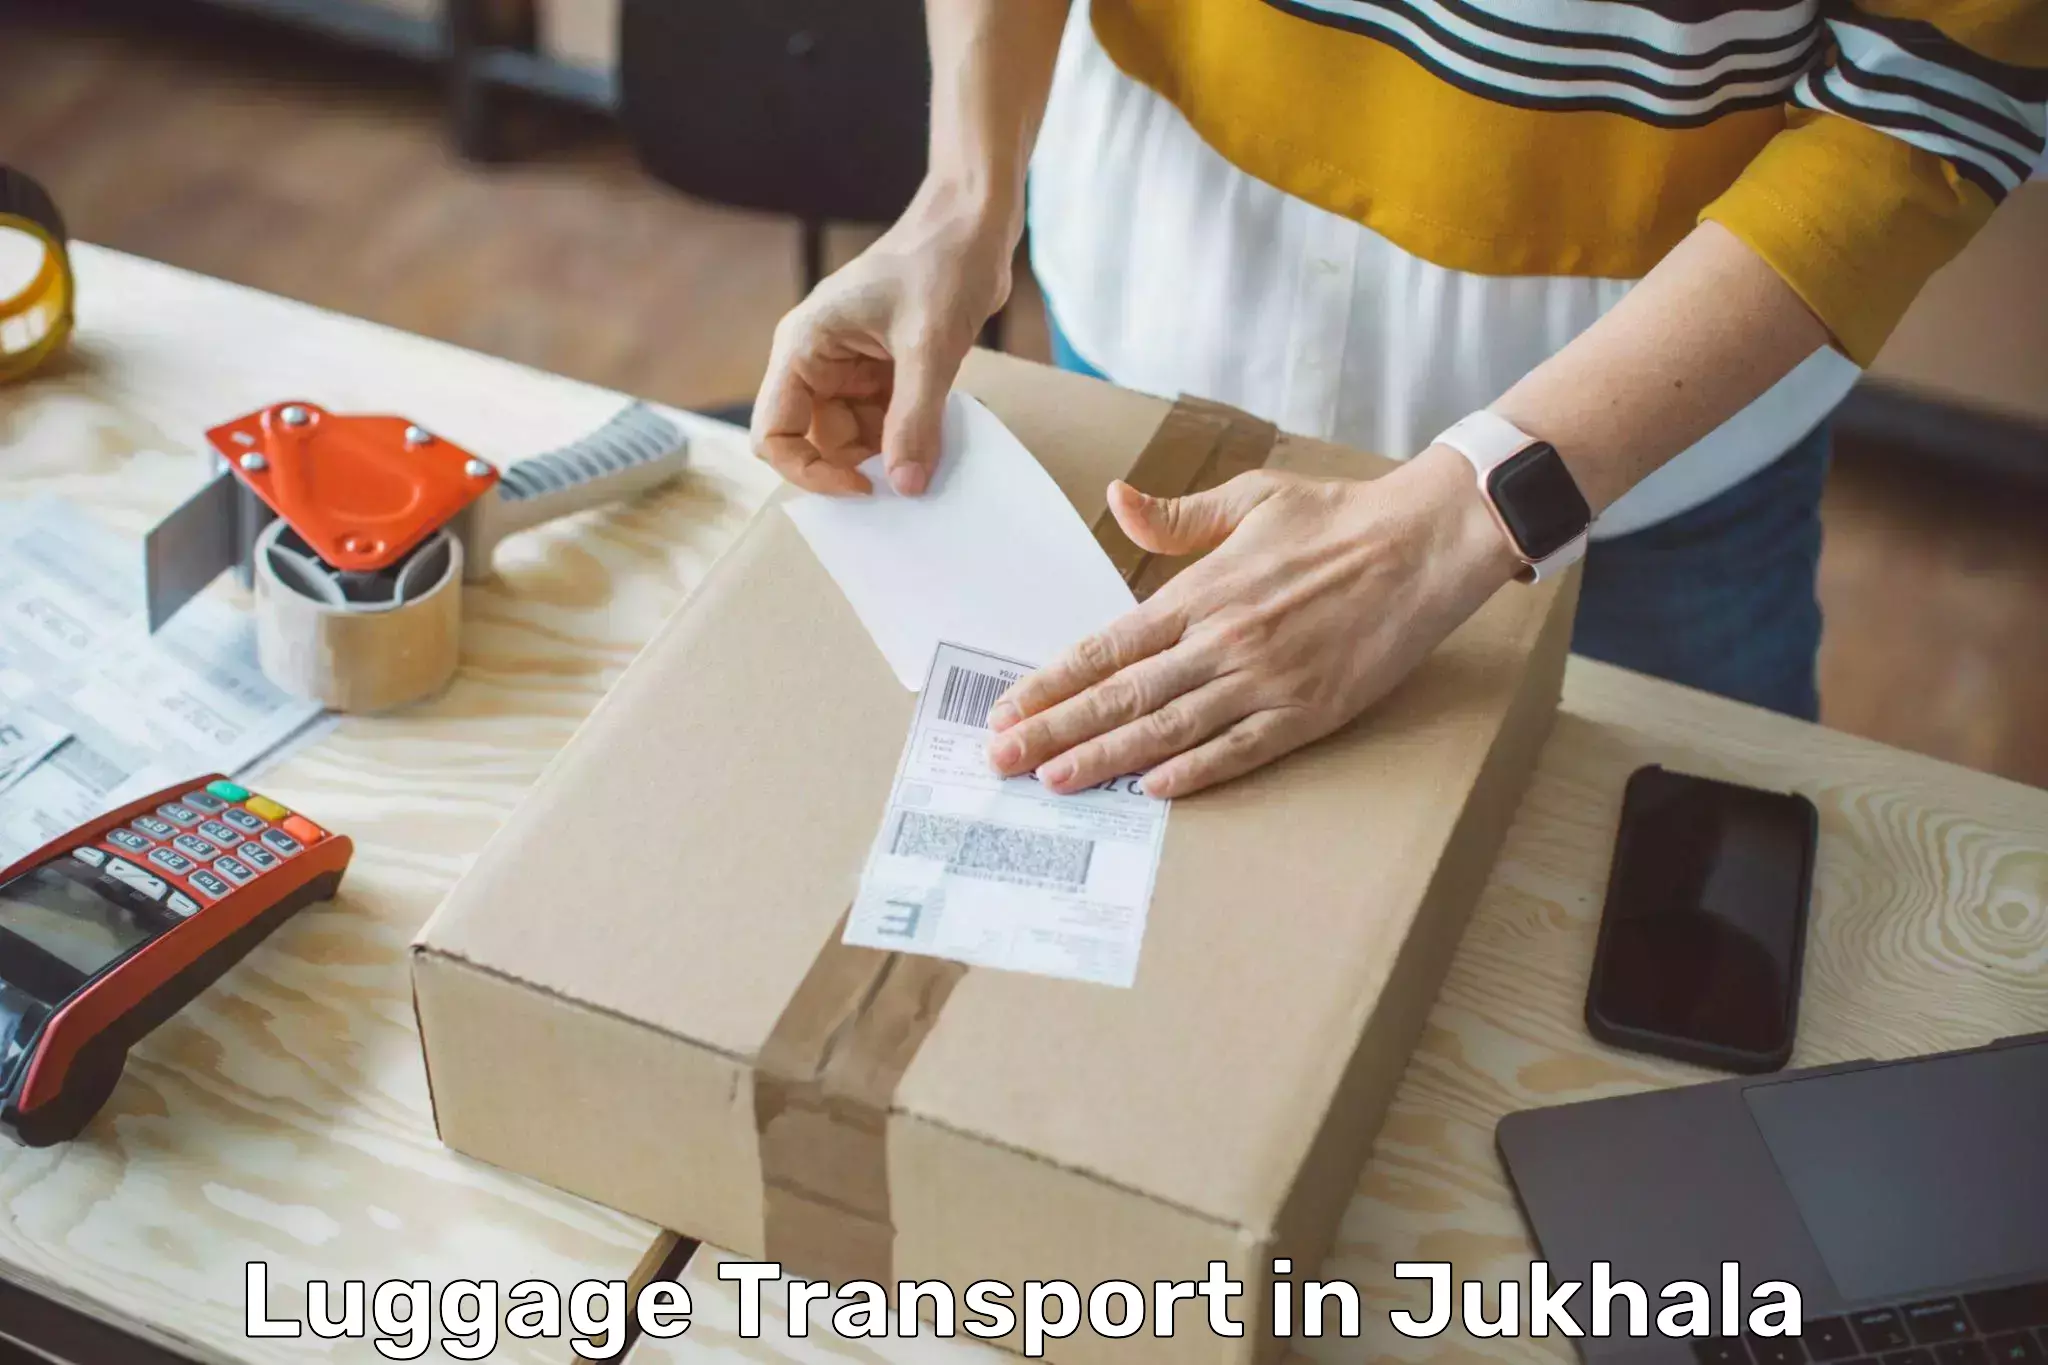 Corporate baggage transport in Jukhala